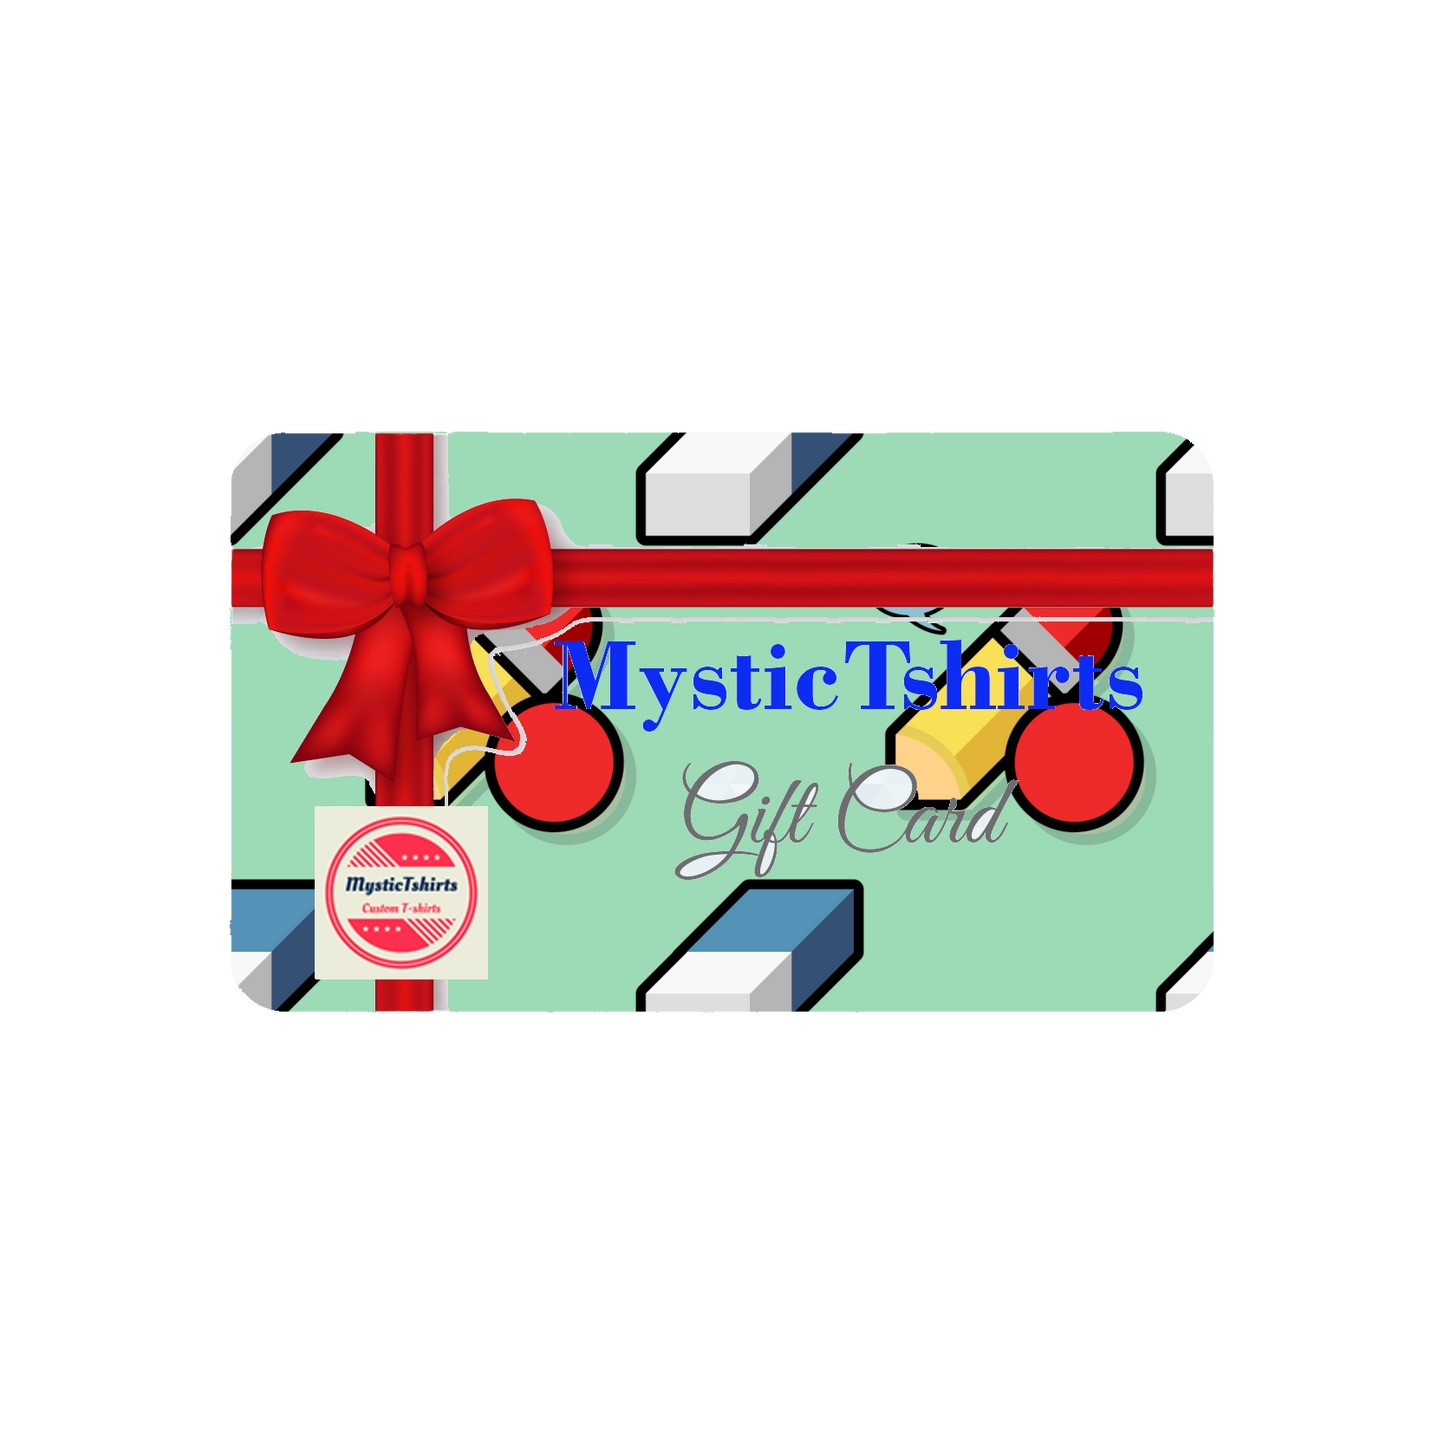 MysticTshirts Gift Card